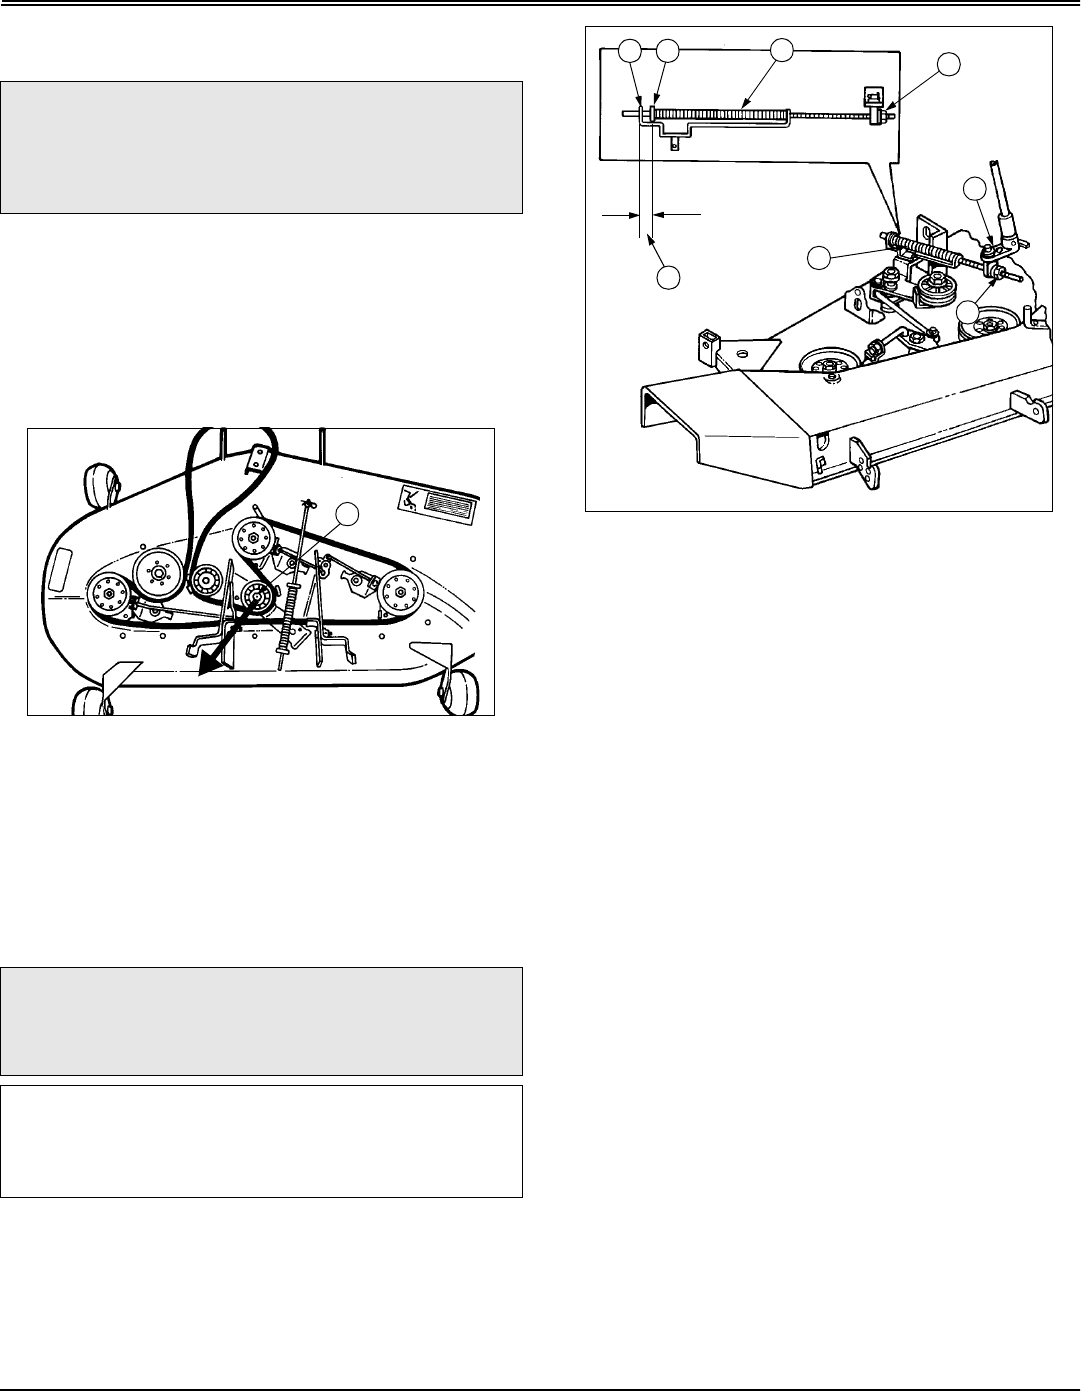 Scotts S2546 Lawn Mower User Manual